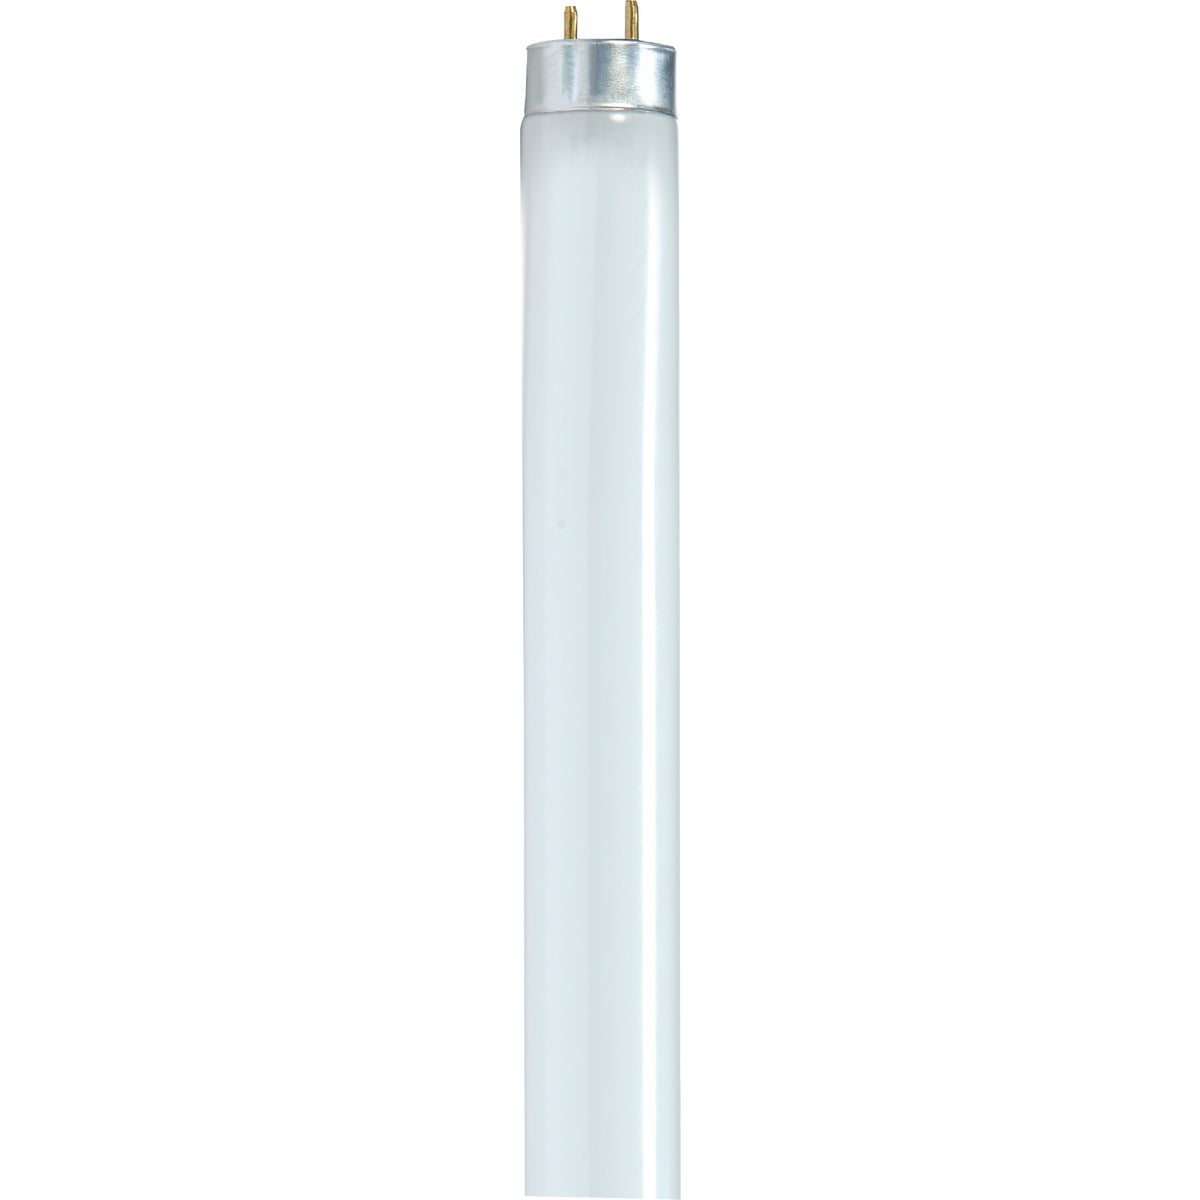 Item 502075, T8 fluorescent tube light bulb with medium bi-pin base.